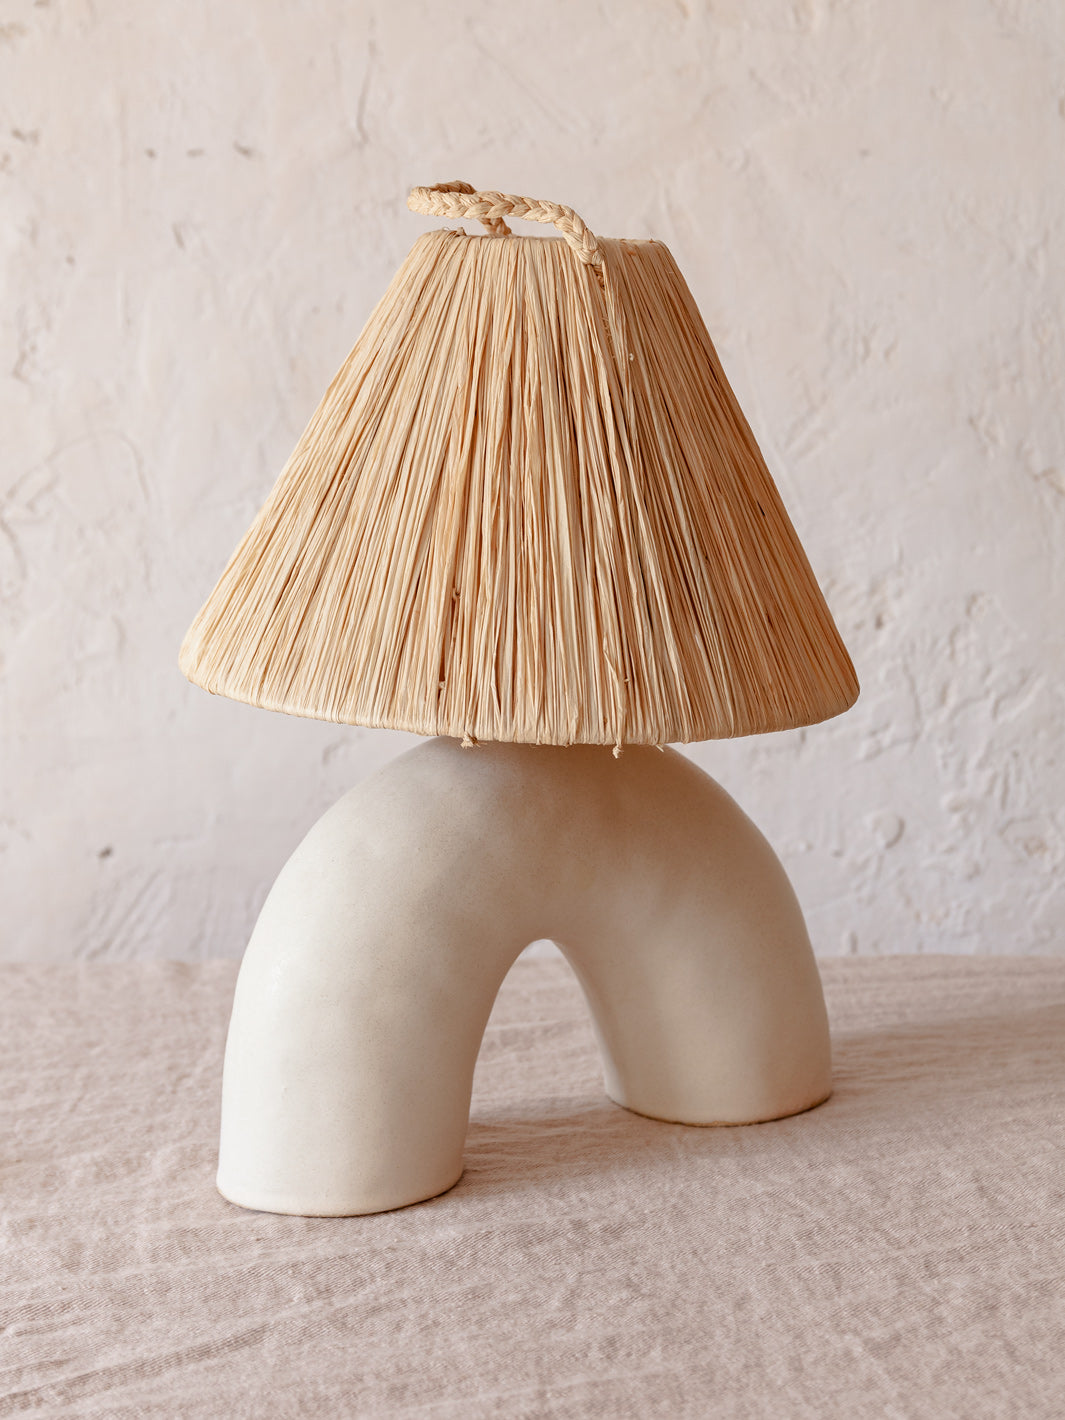 Volta Lamp by Marta Bonilla